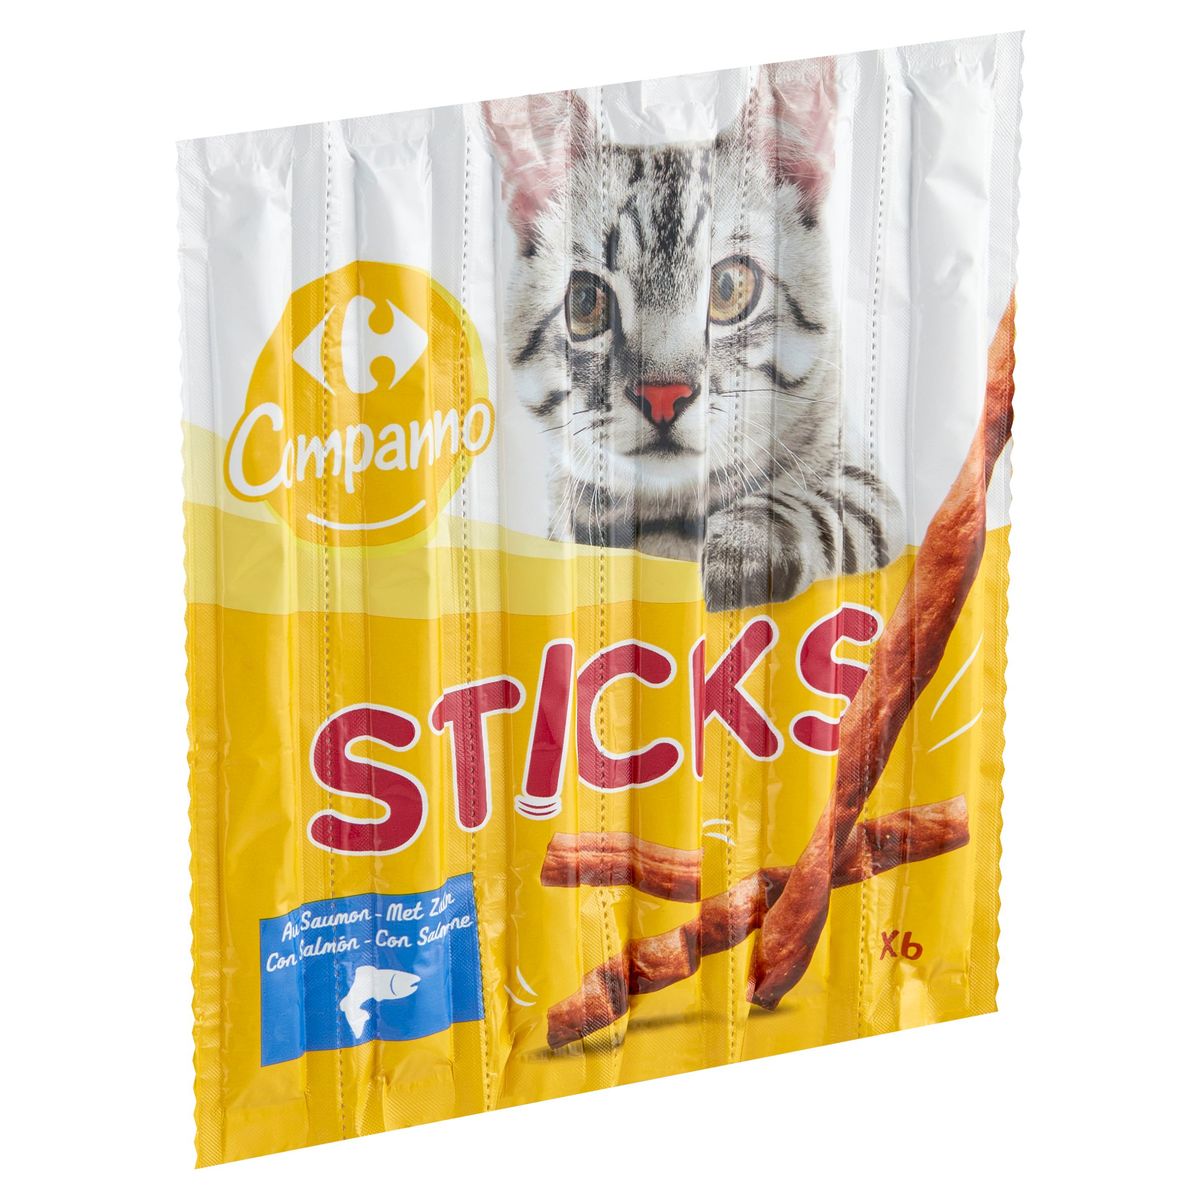 Carrefour Companino Sticks au Saumon 6 x 5 g